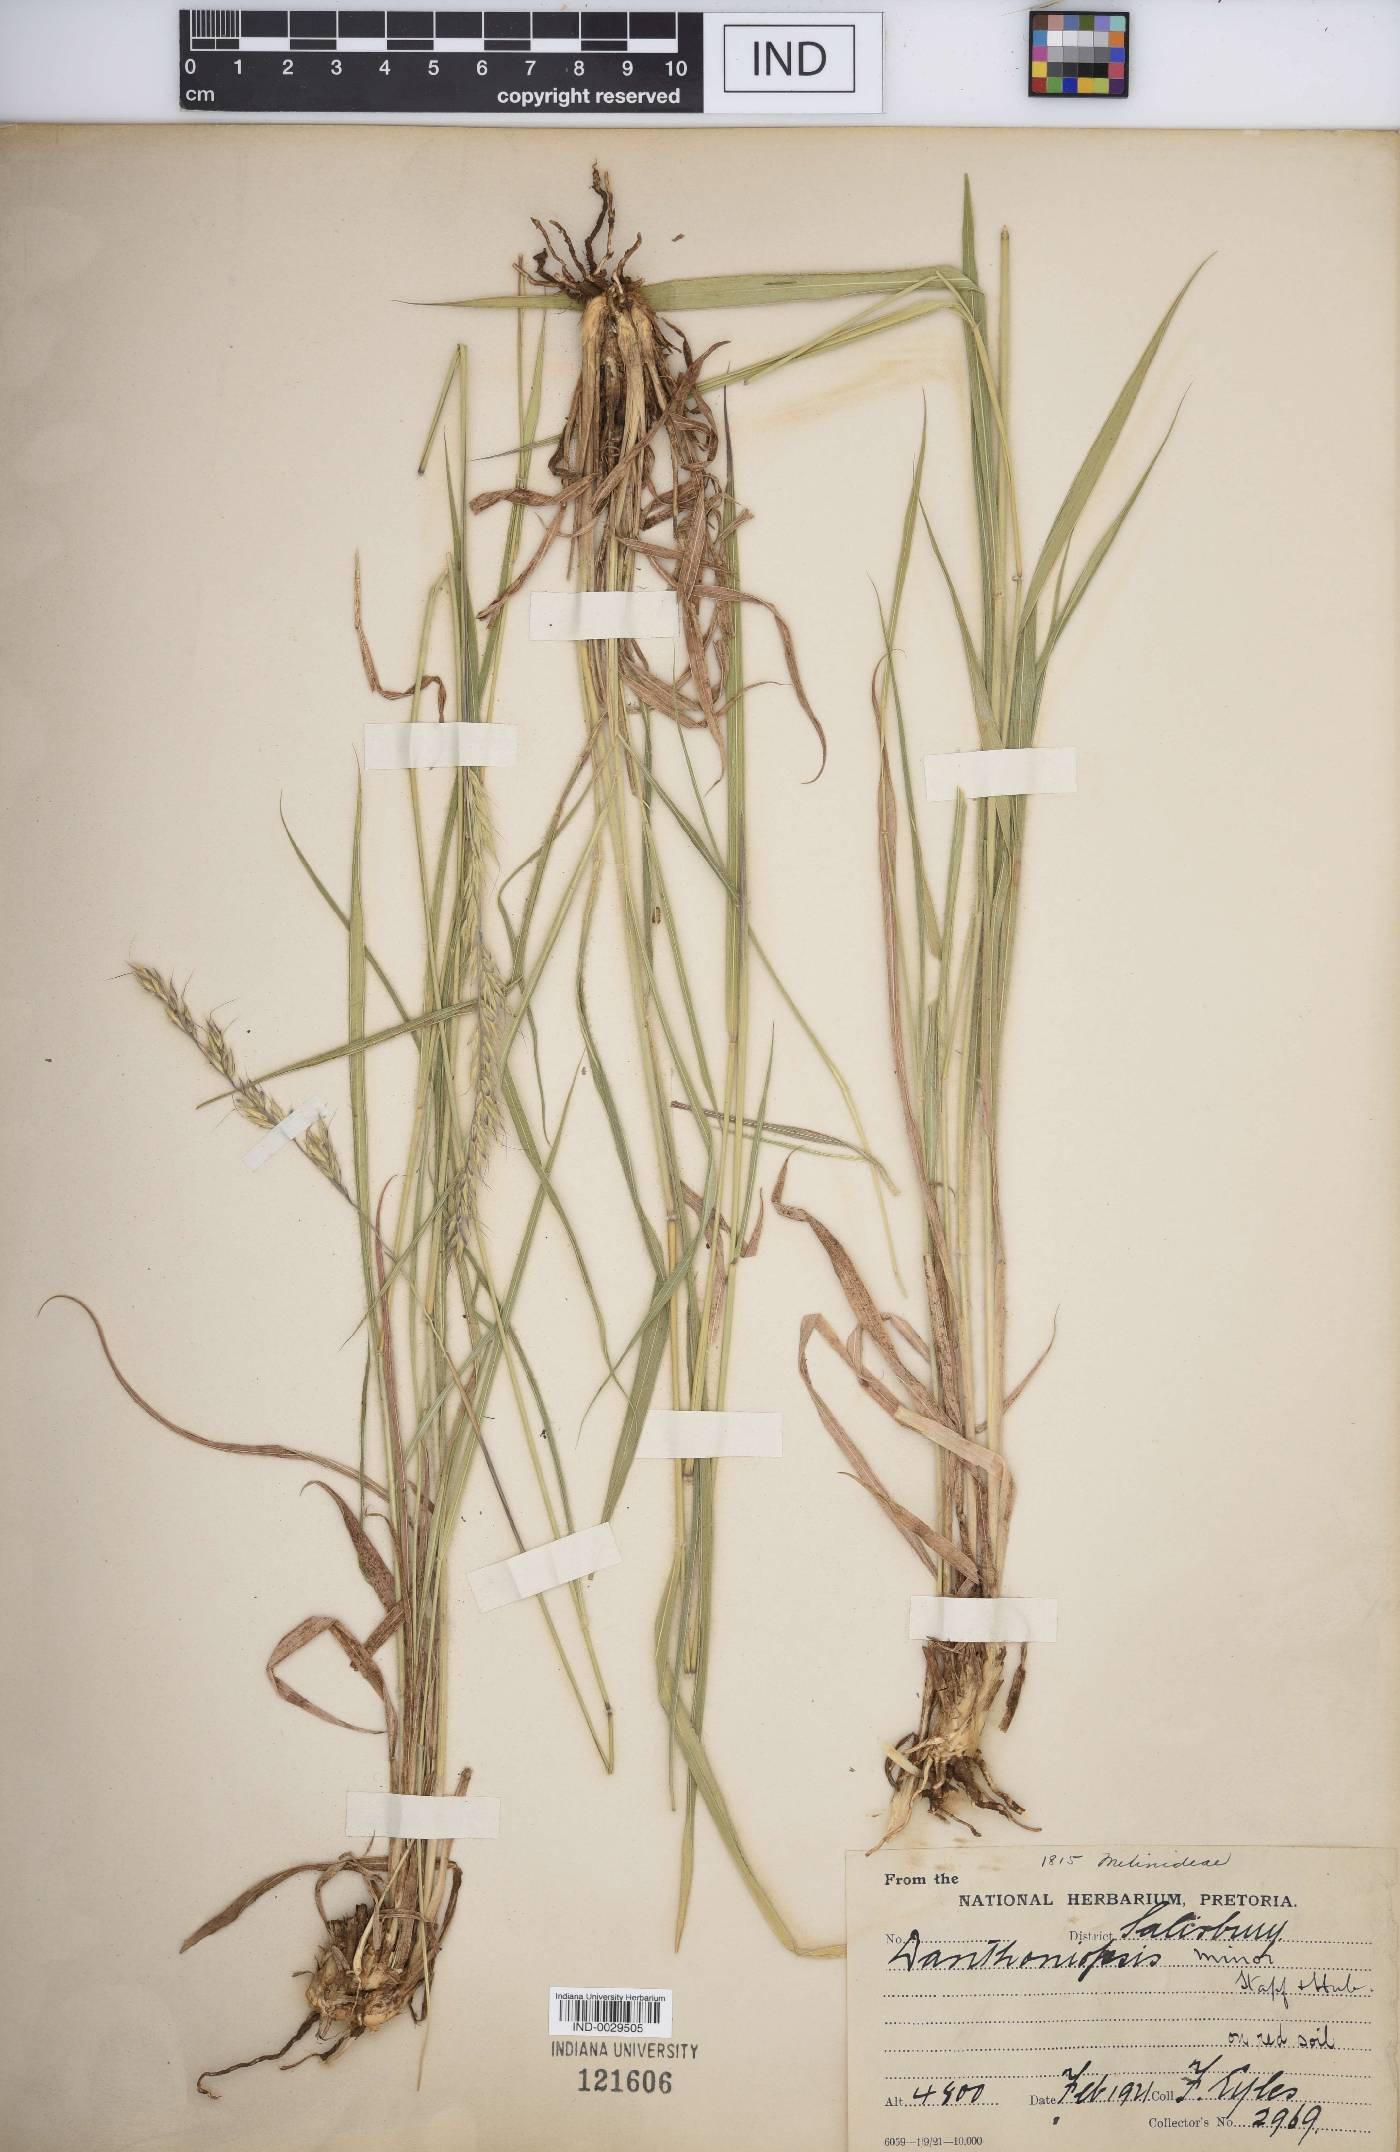 Danthoniopsis image